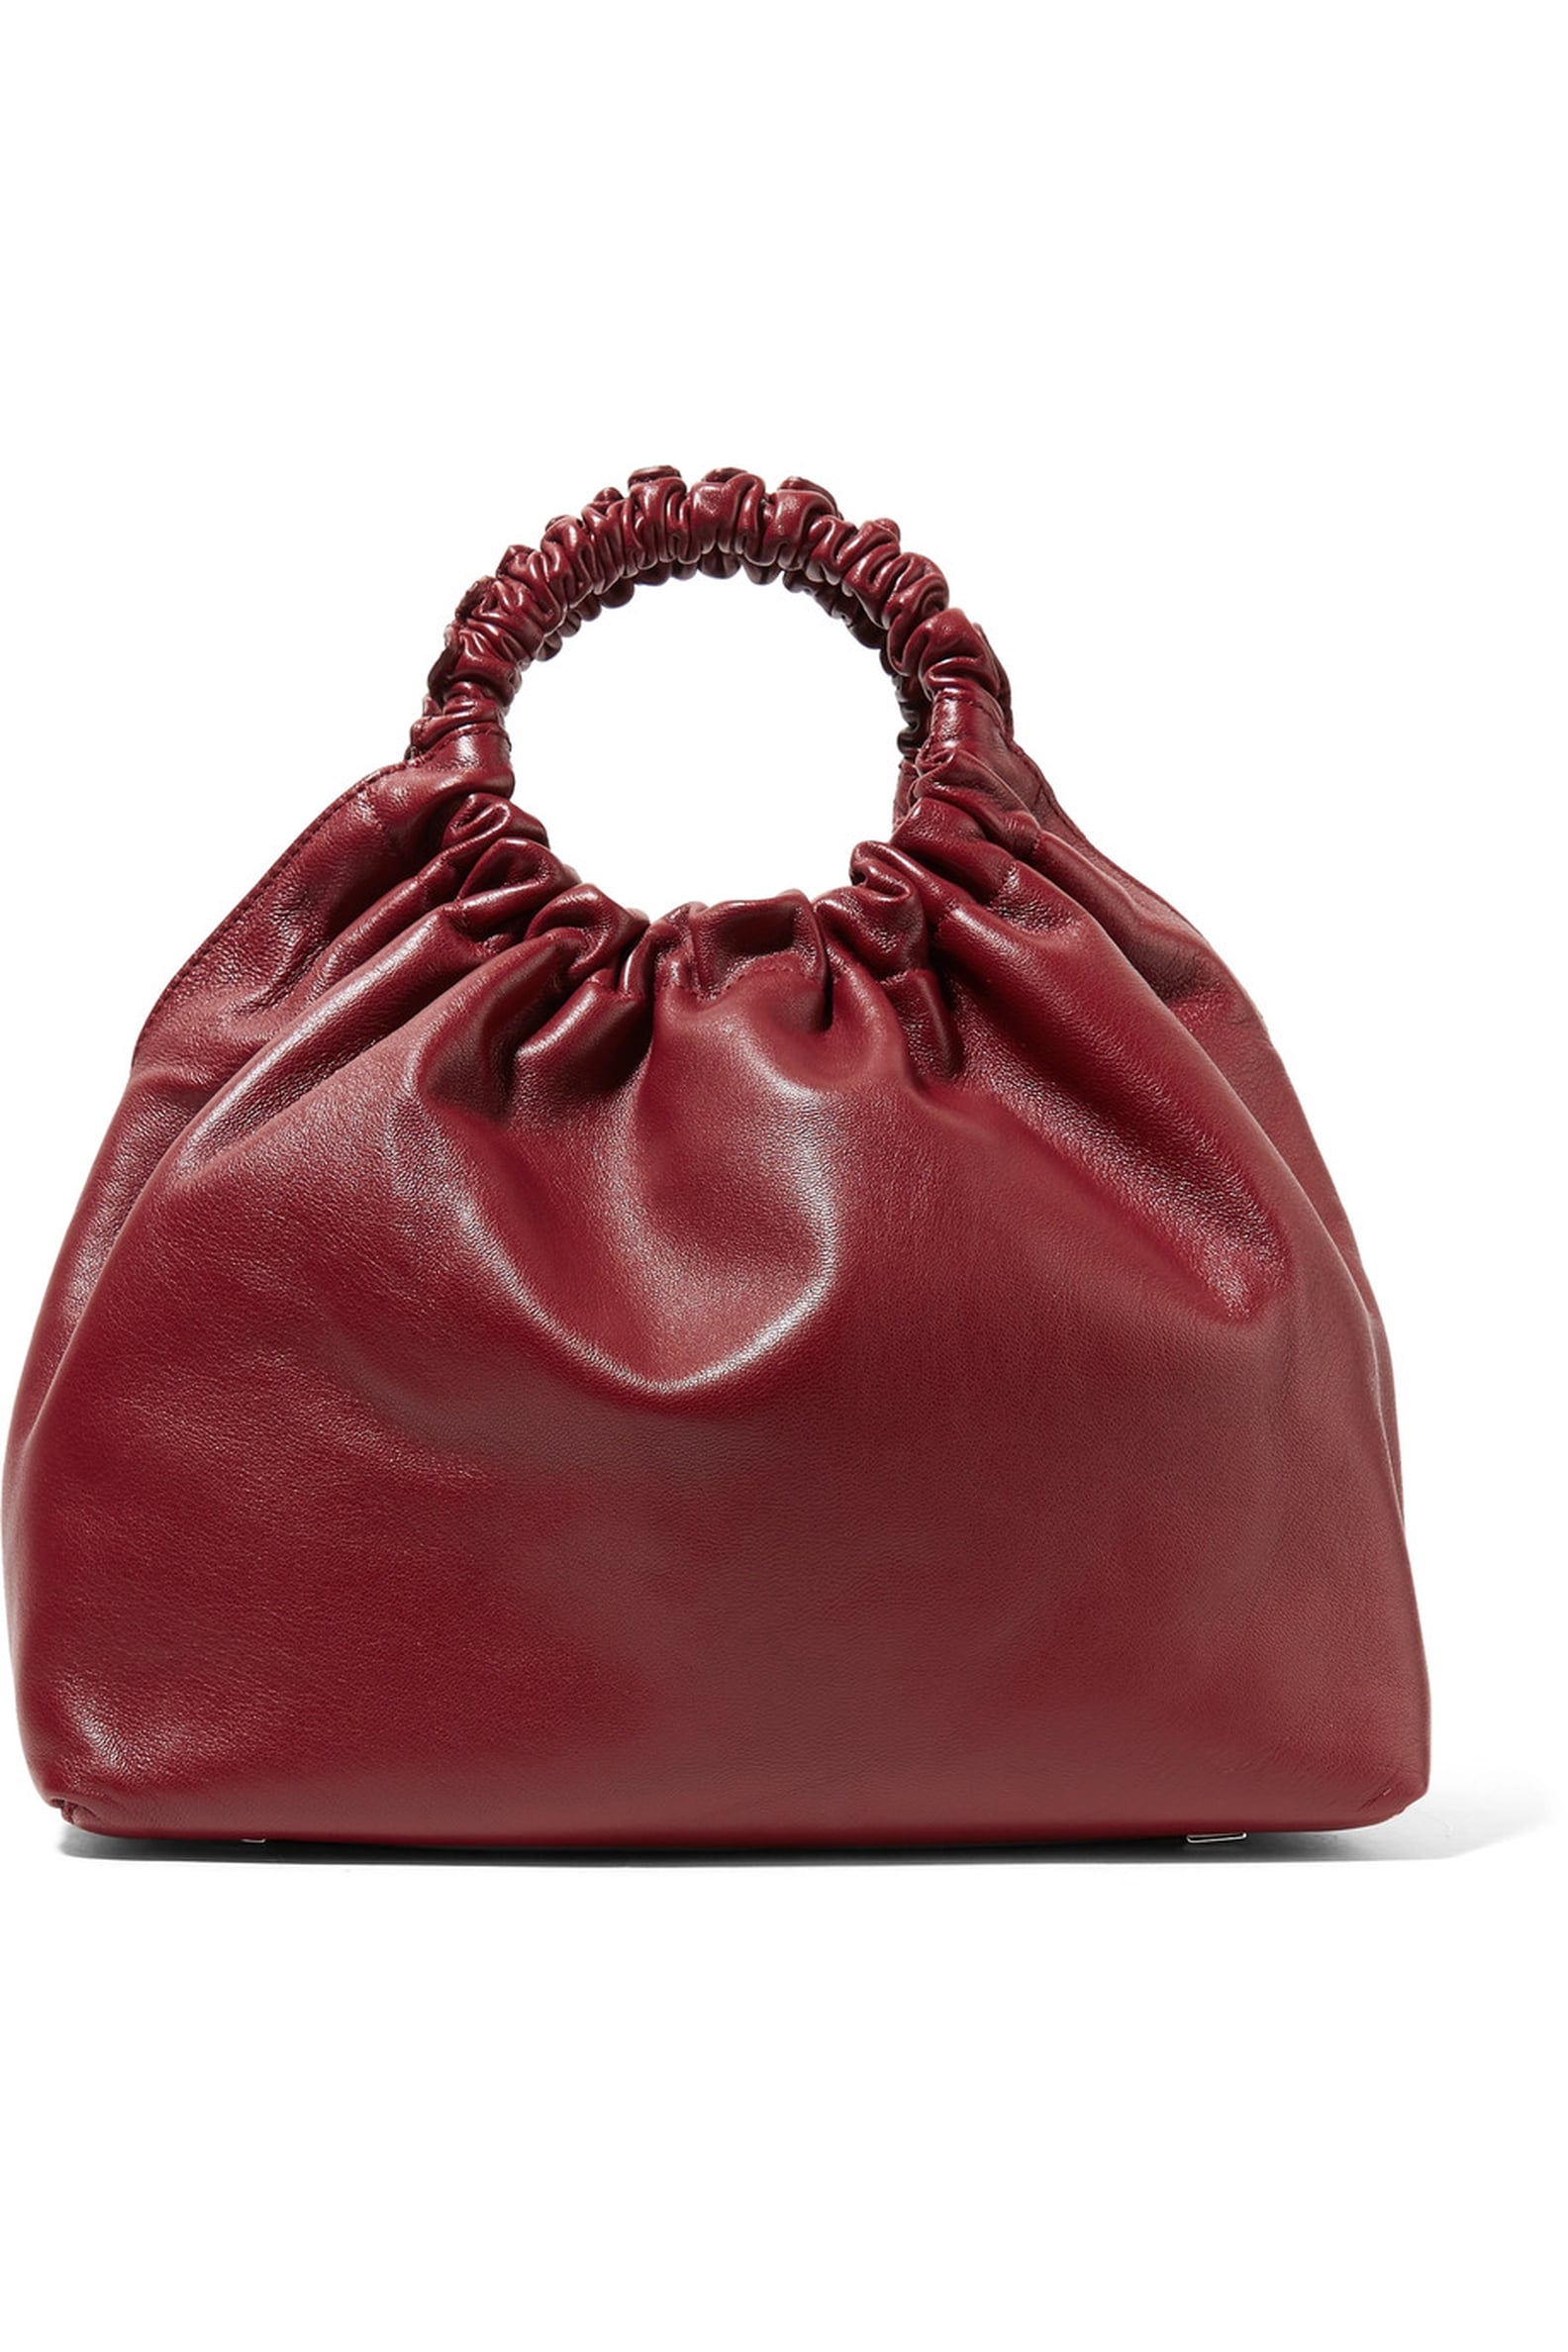 Best Handbag Gifts | POPSUGAR Fashion